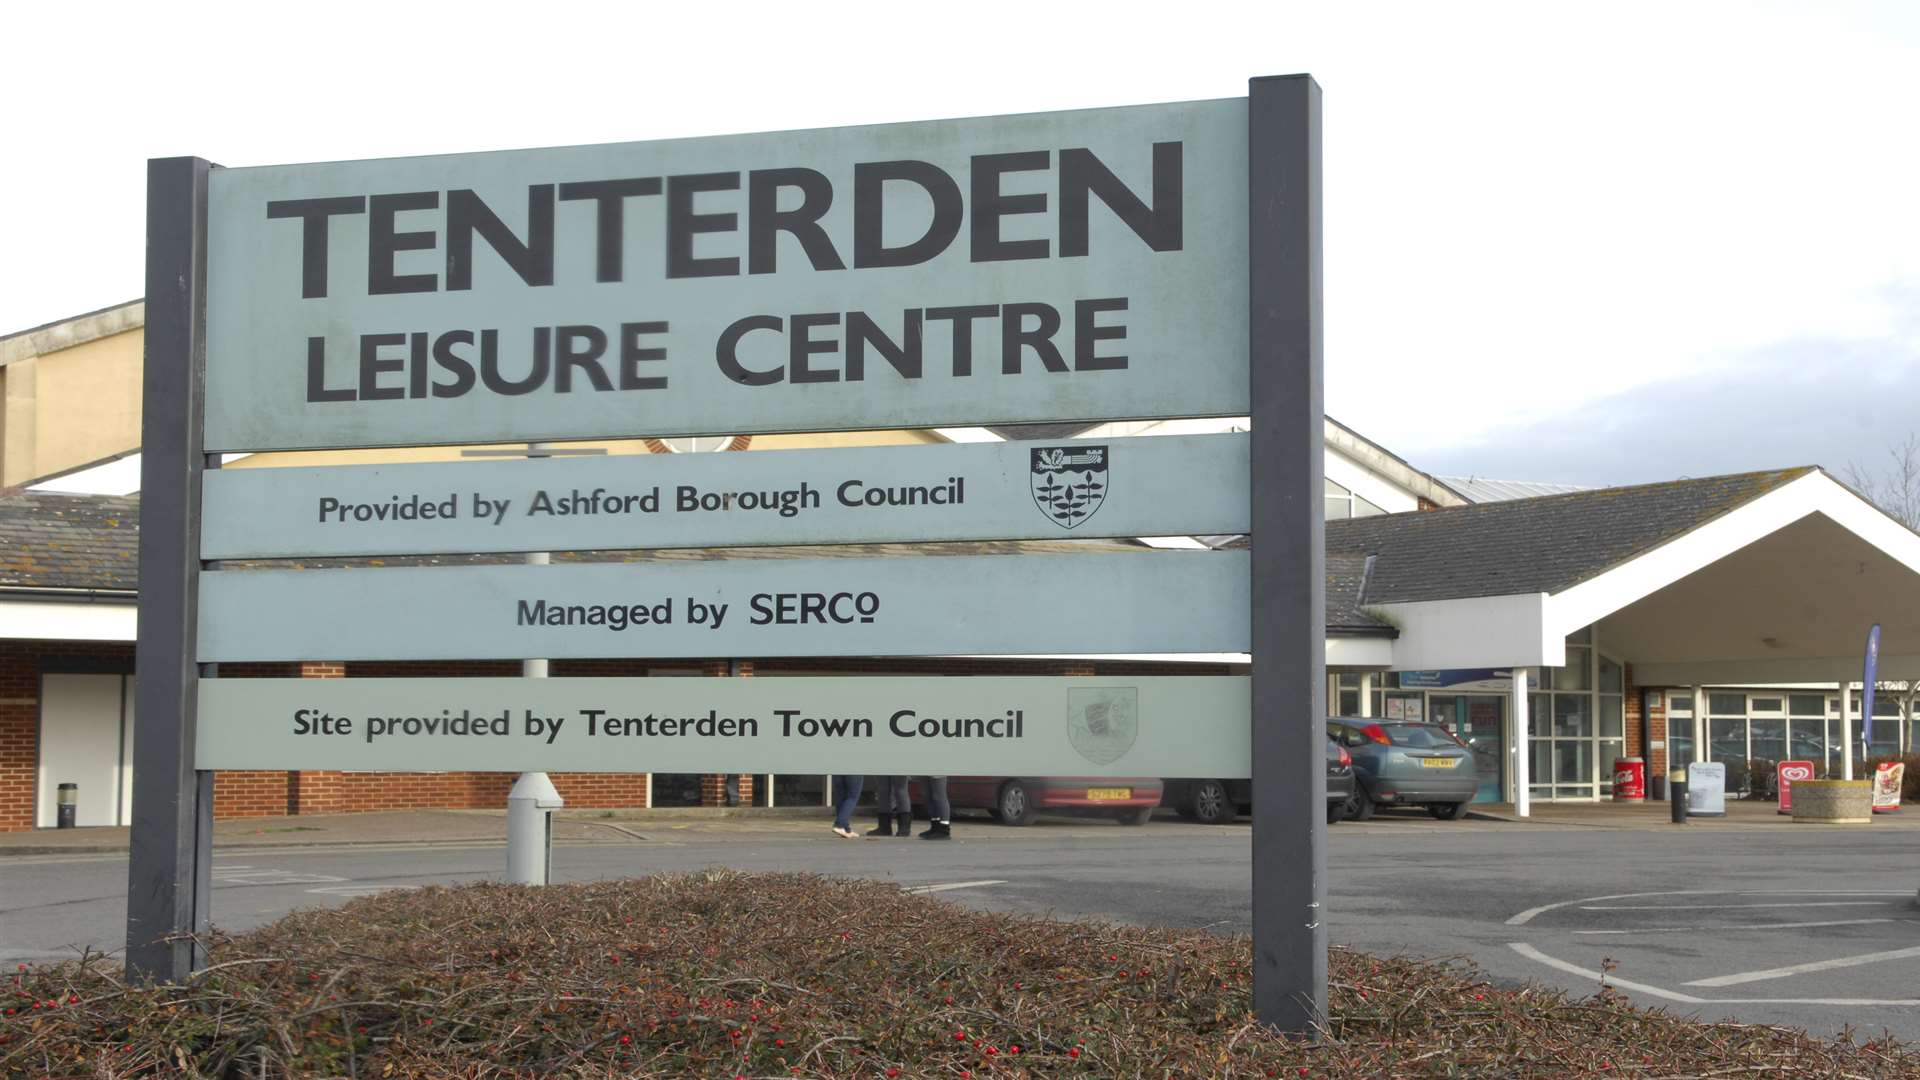 A woman died at Tenterden Leisure Centre